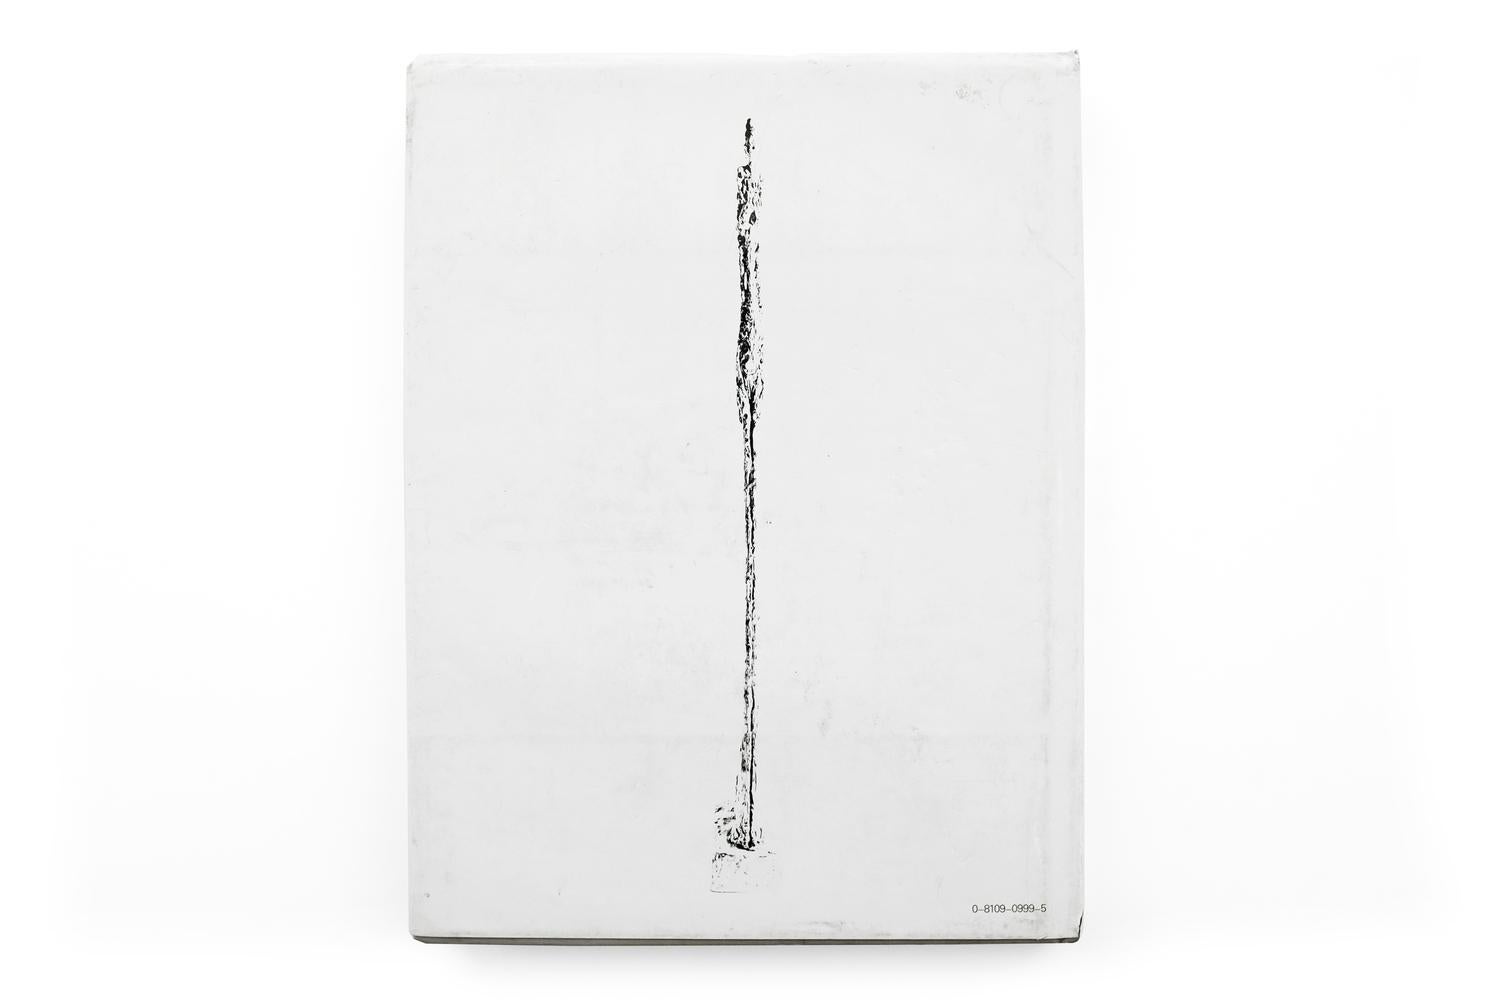 Alberto Giacometti von Herbert & Mercedes Matter, HC 1. Auflage, 1987 2